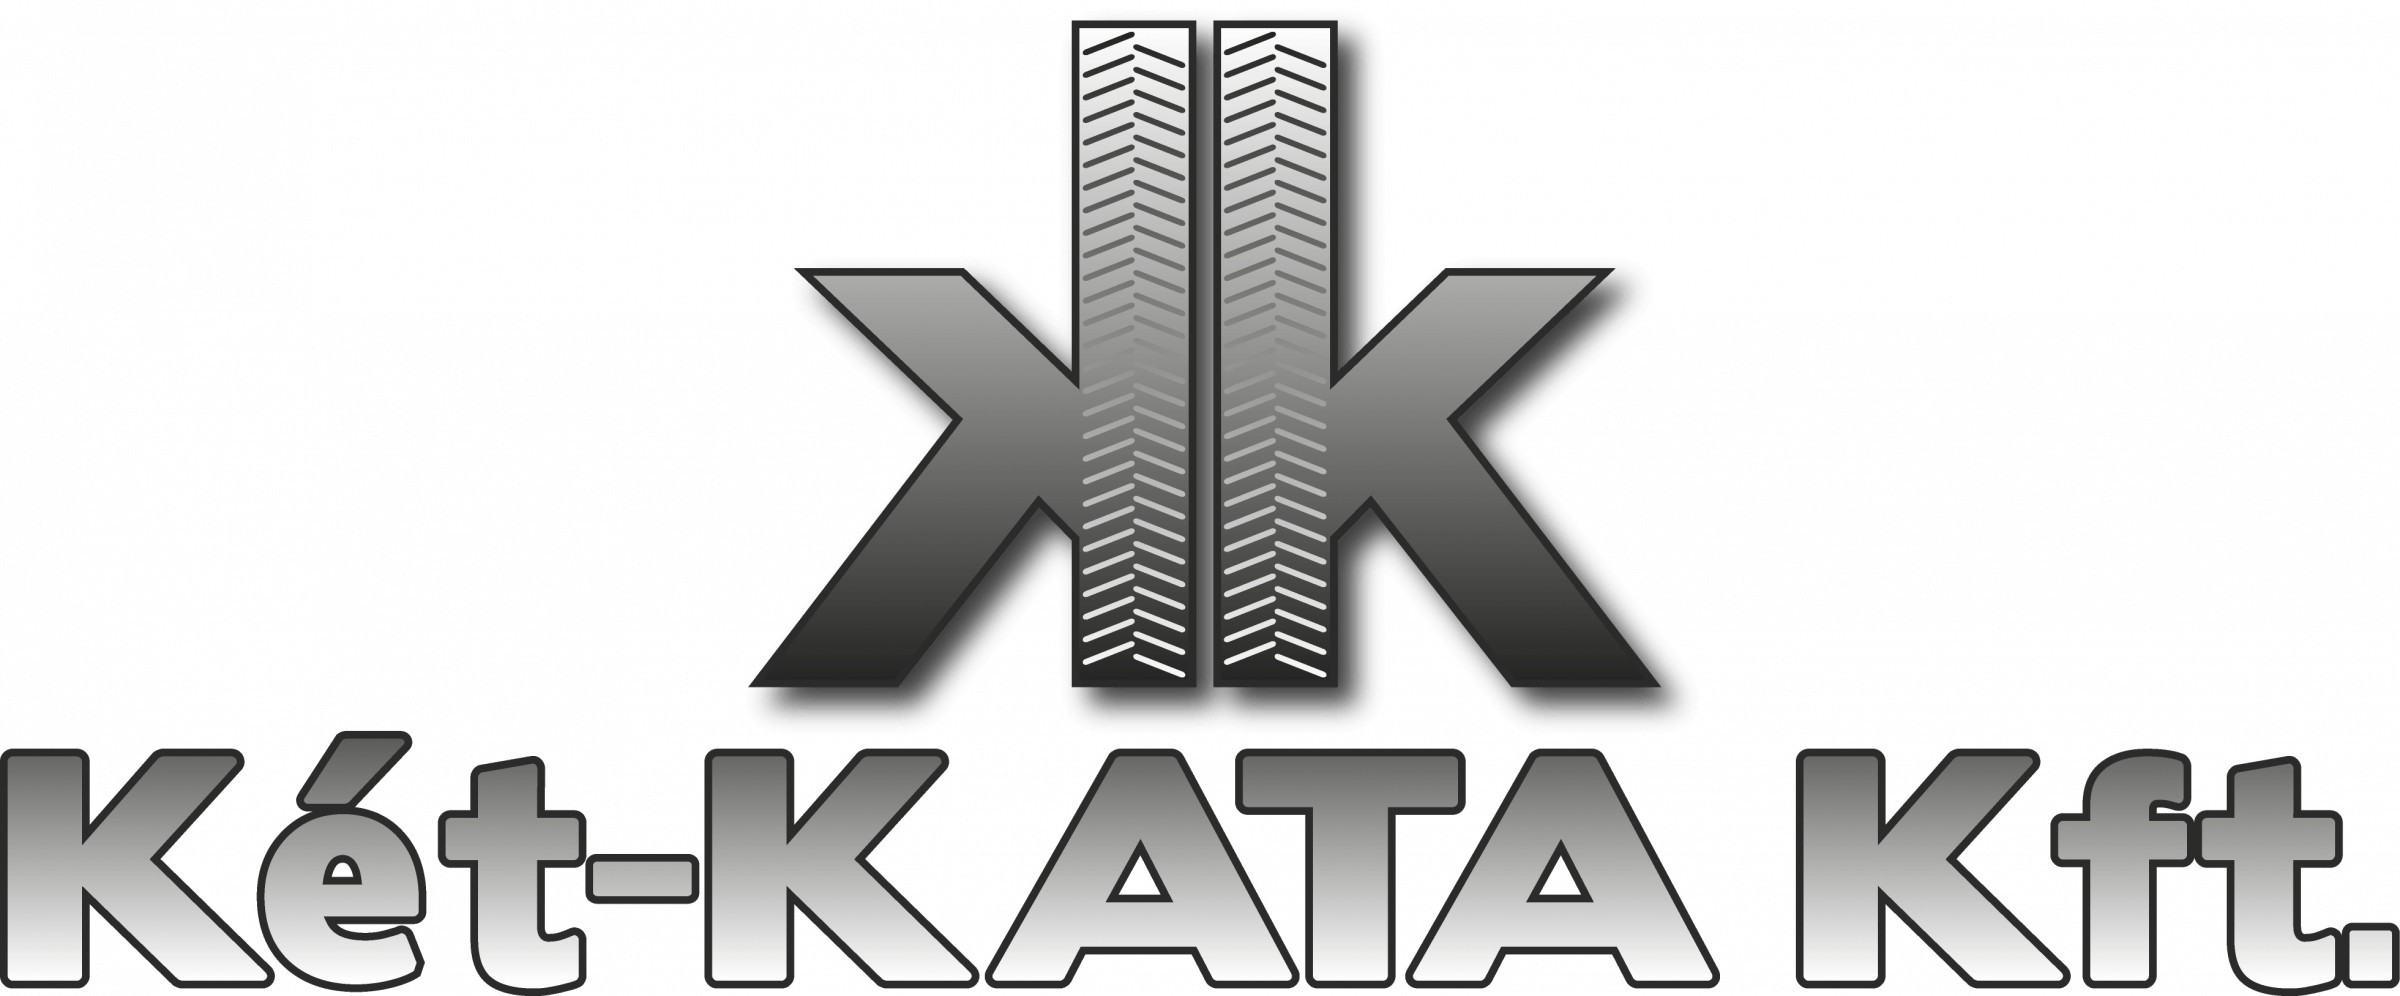 Company logo for 'Két-KATA Kft'.